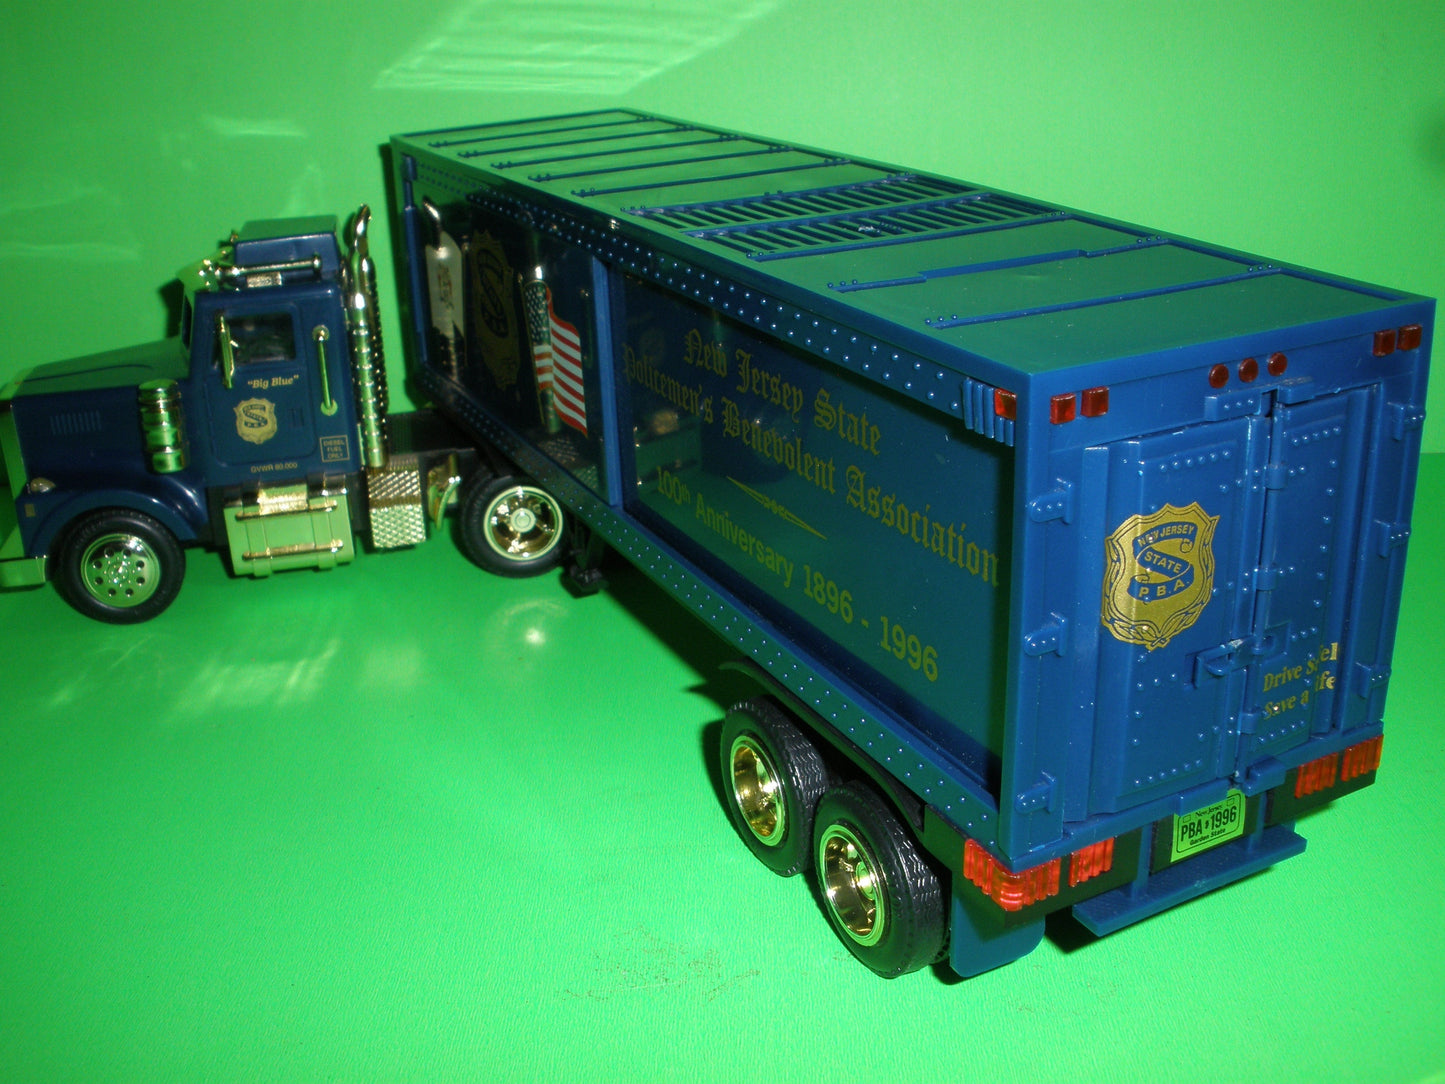 #1 - New Jersey State Policemen's Benevolent Association Freight Truck